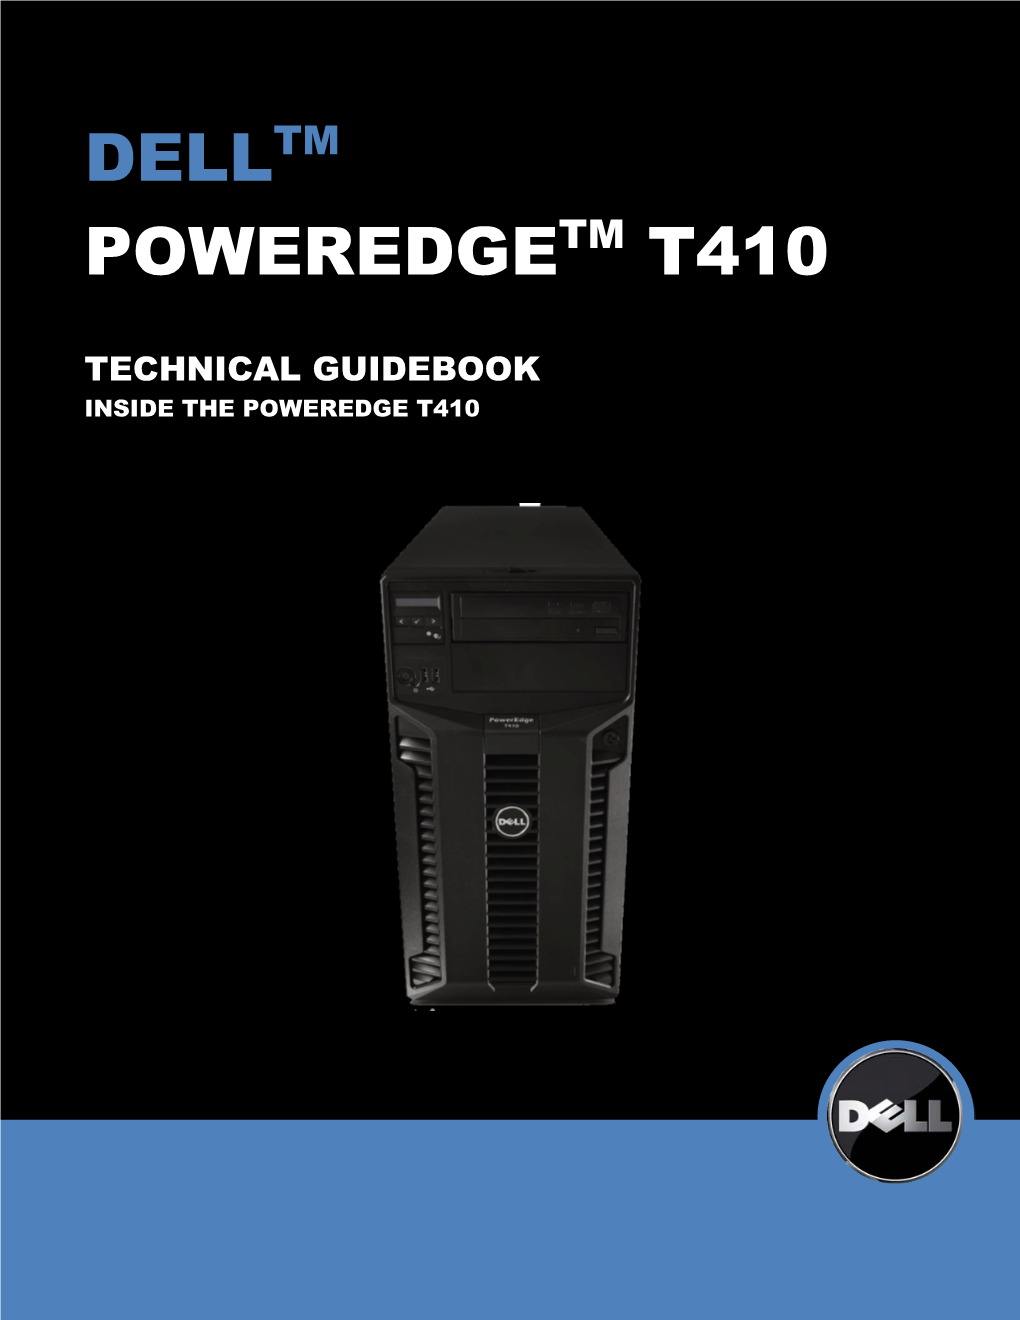 Dell-Poweredge-T410-Technical-Guidebook-Rev1.Pdf